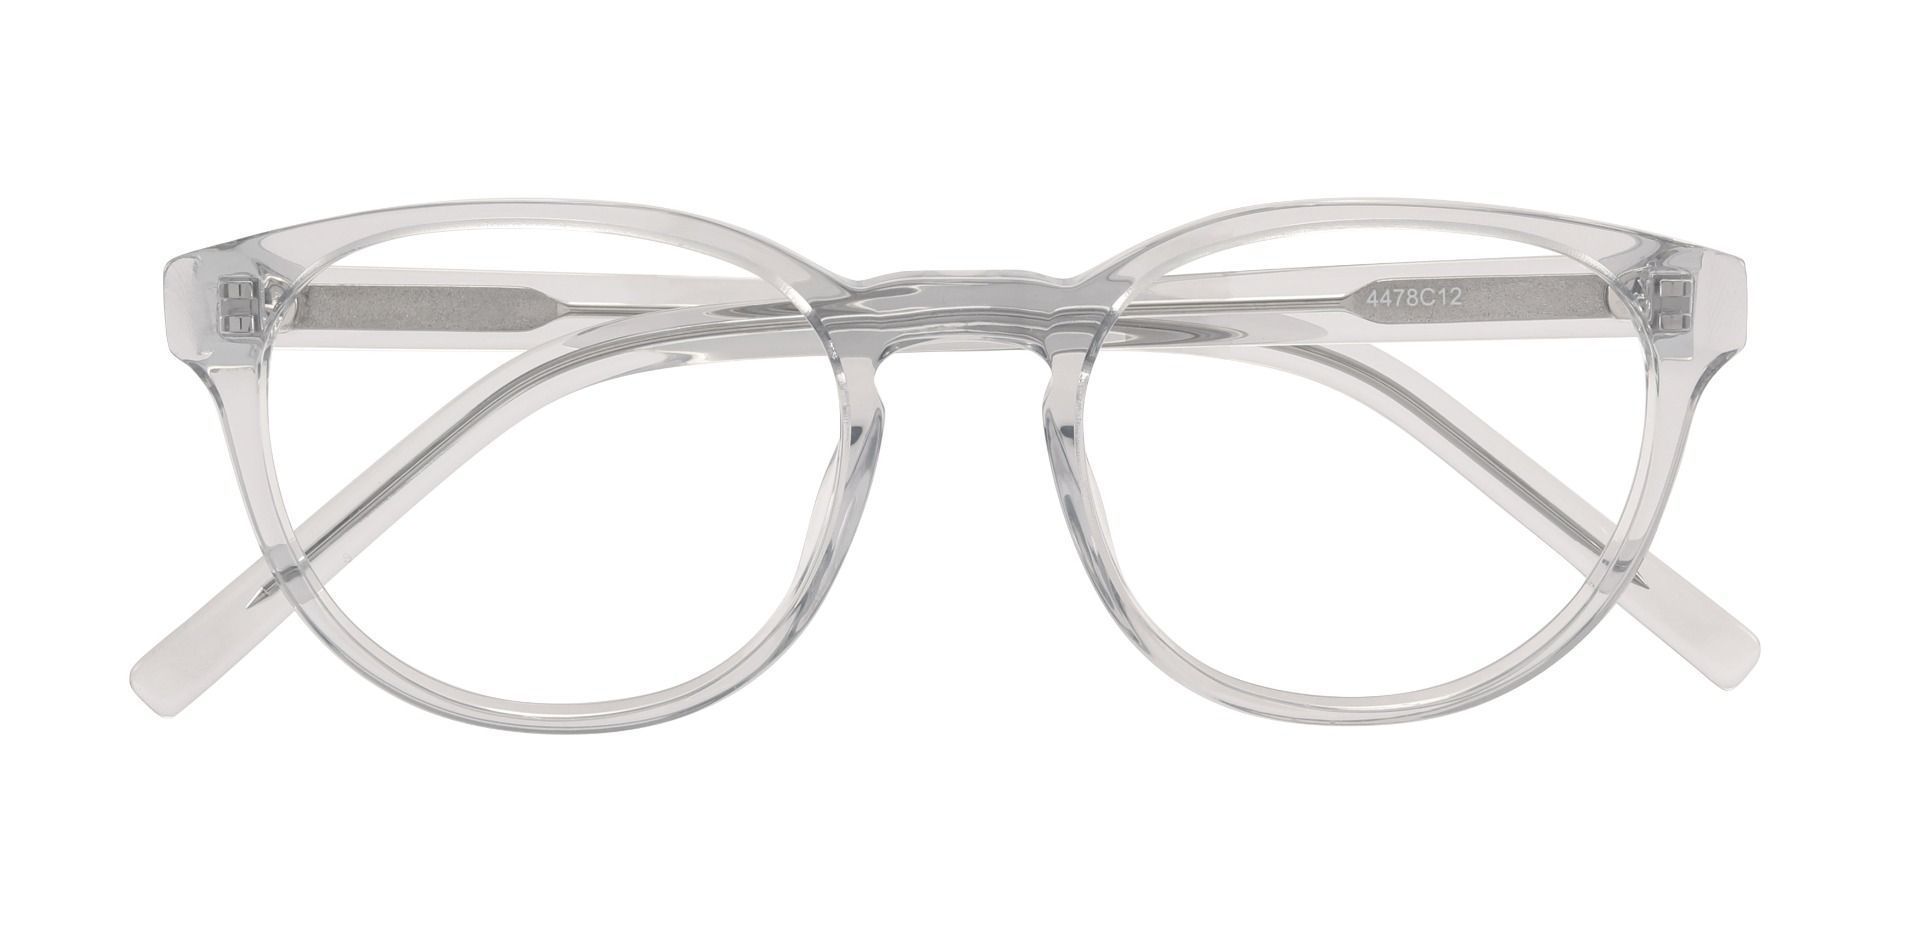 Wayland Oval Prescription Glasses - Clear